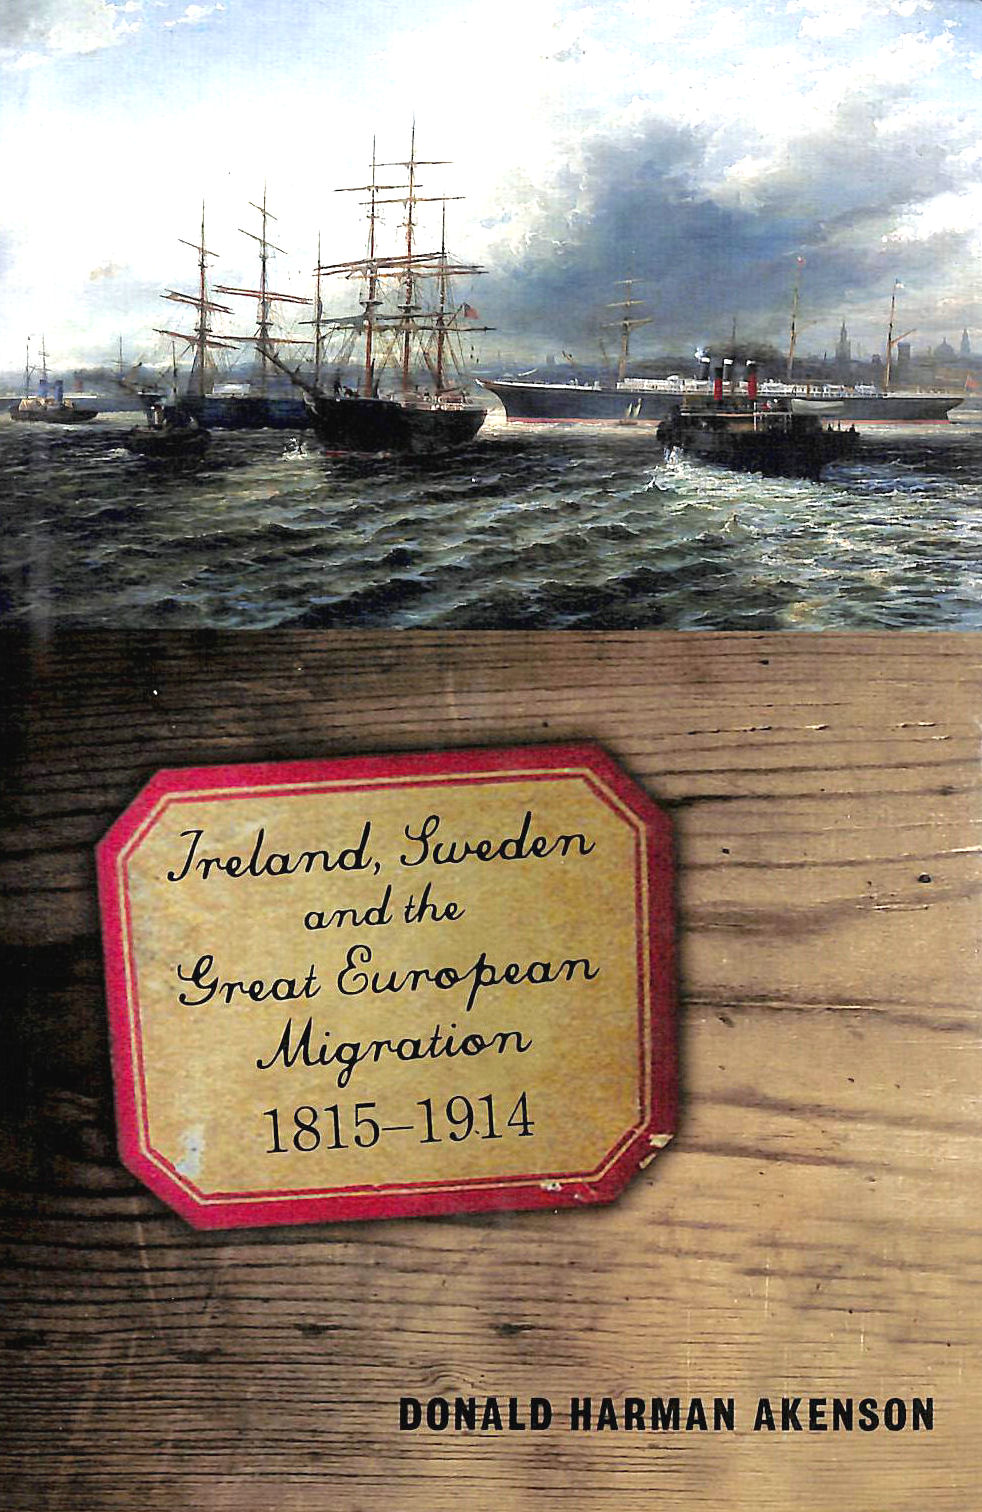 DONALD HARMAN AKENSON - Ireland, Sweden and the Great European Migration: 1815-1914